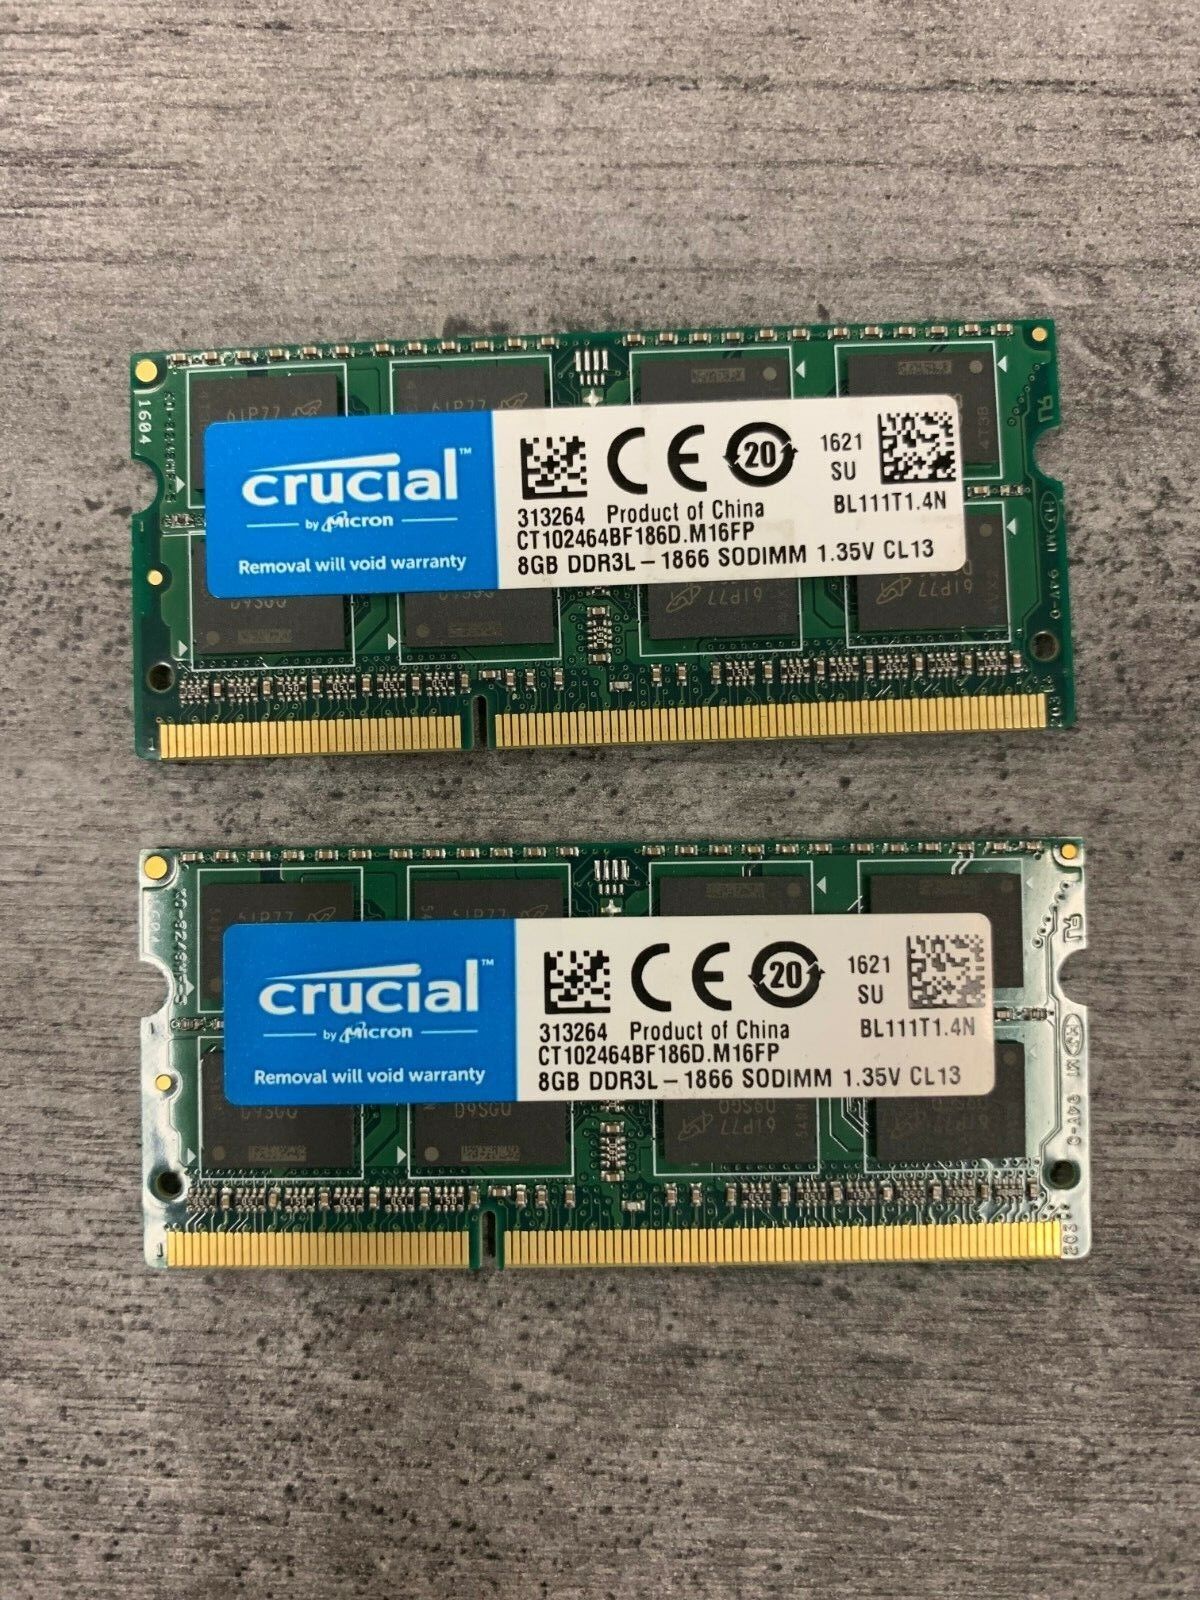 16GB (2 X 8GB ) PC3-12800S DDR3L/DDR3 SODIMM Laptop Memory - Major Brands